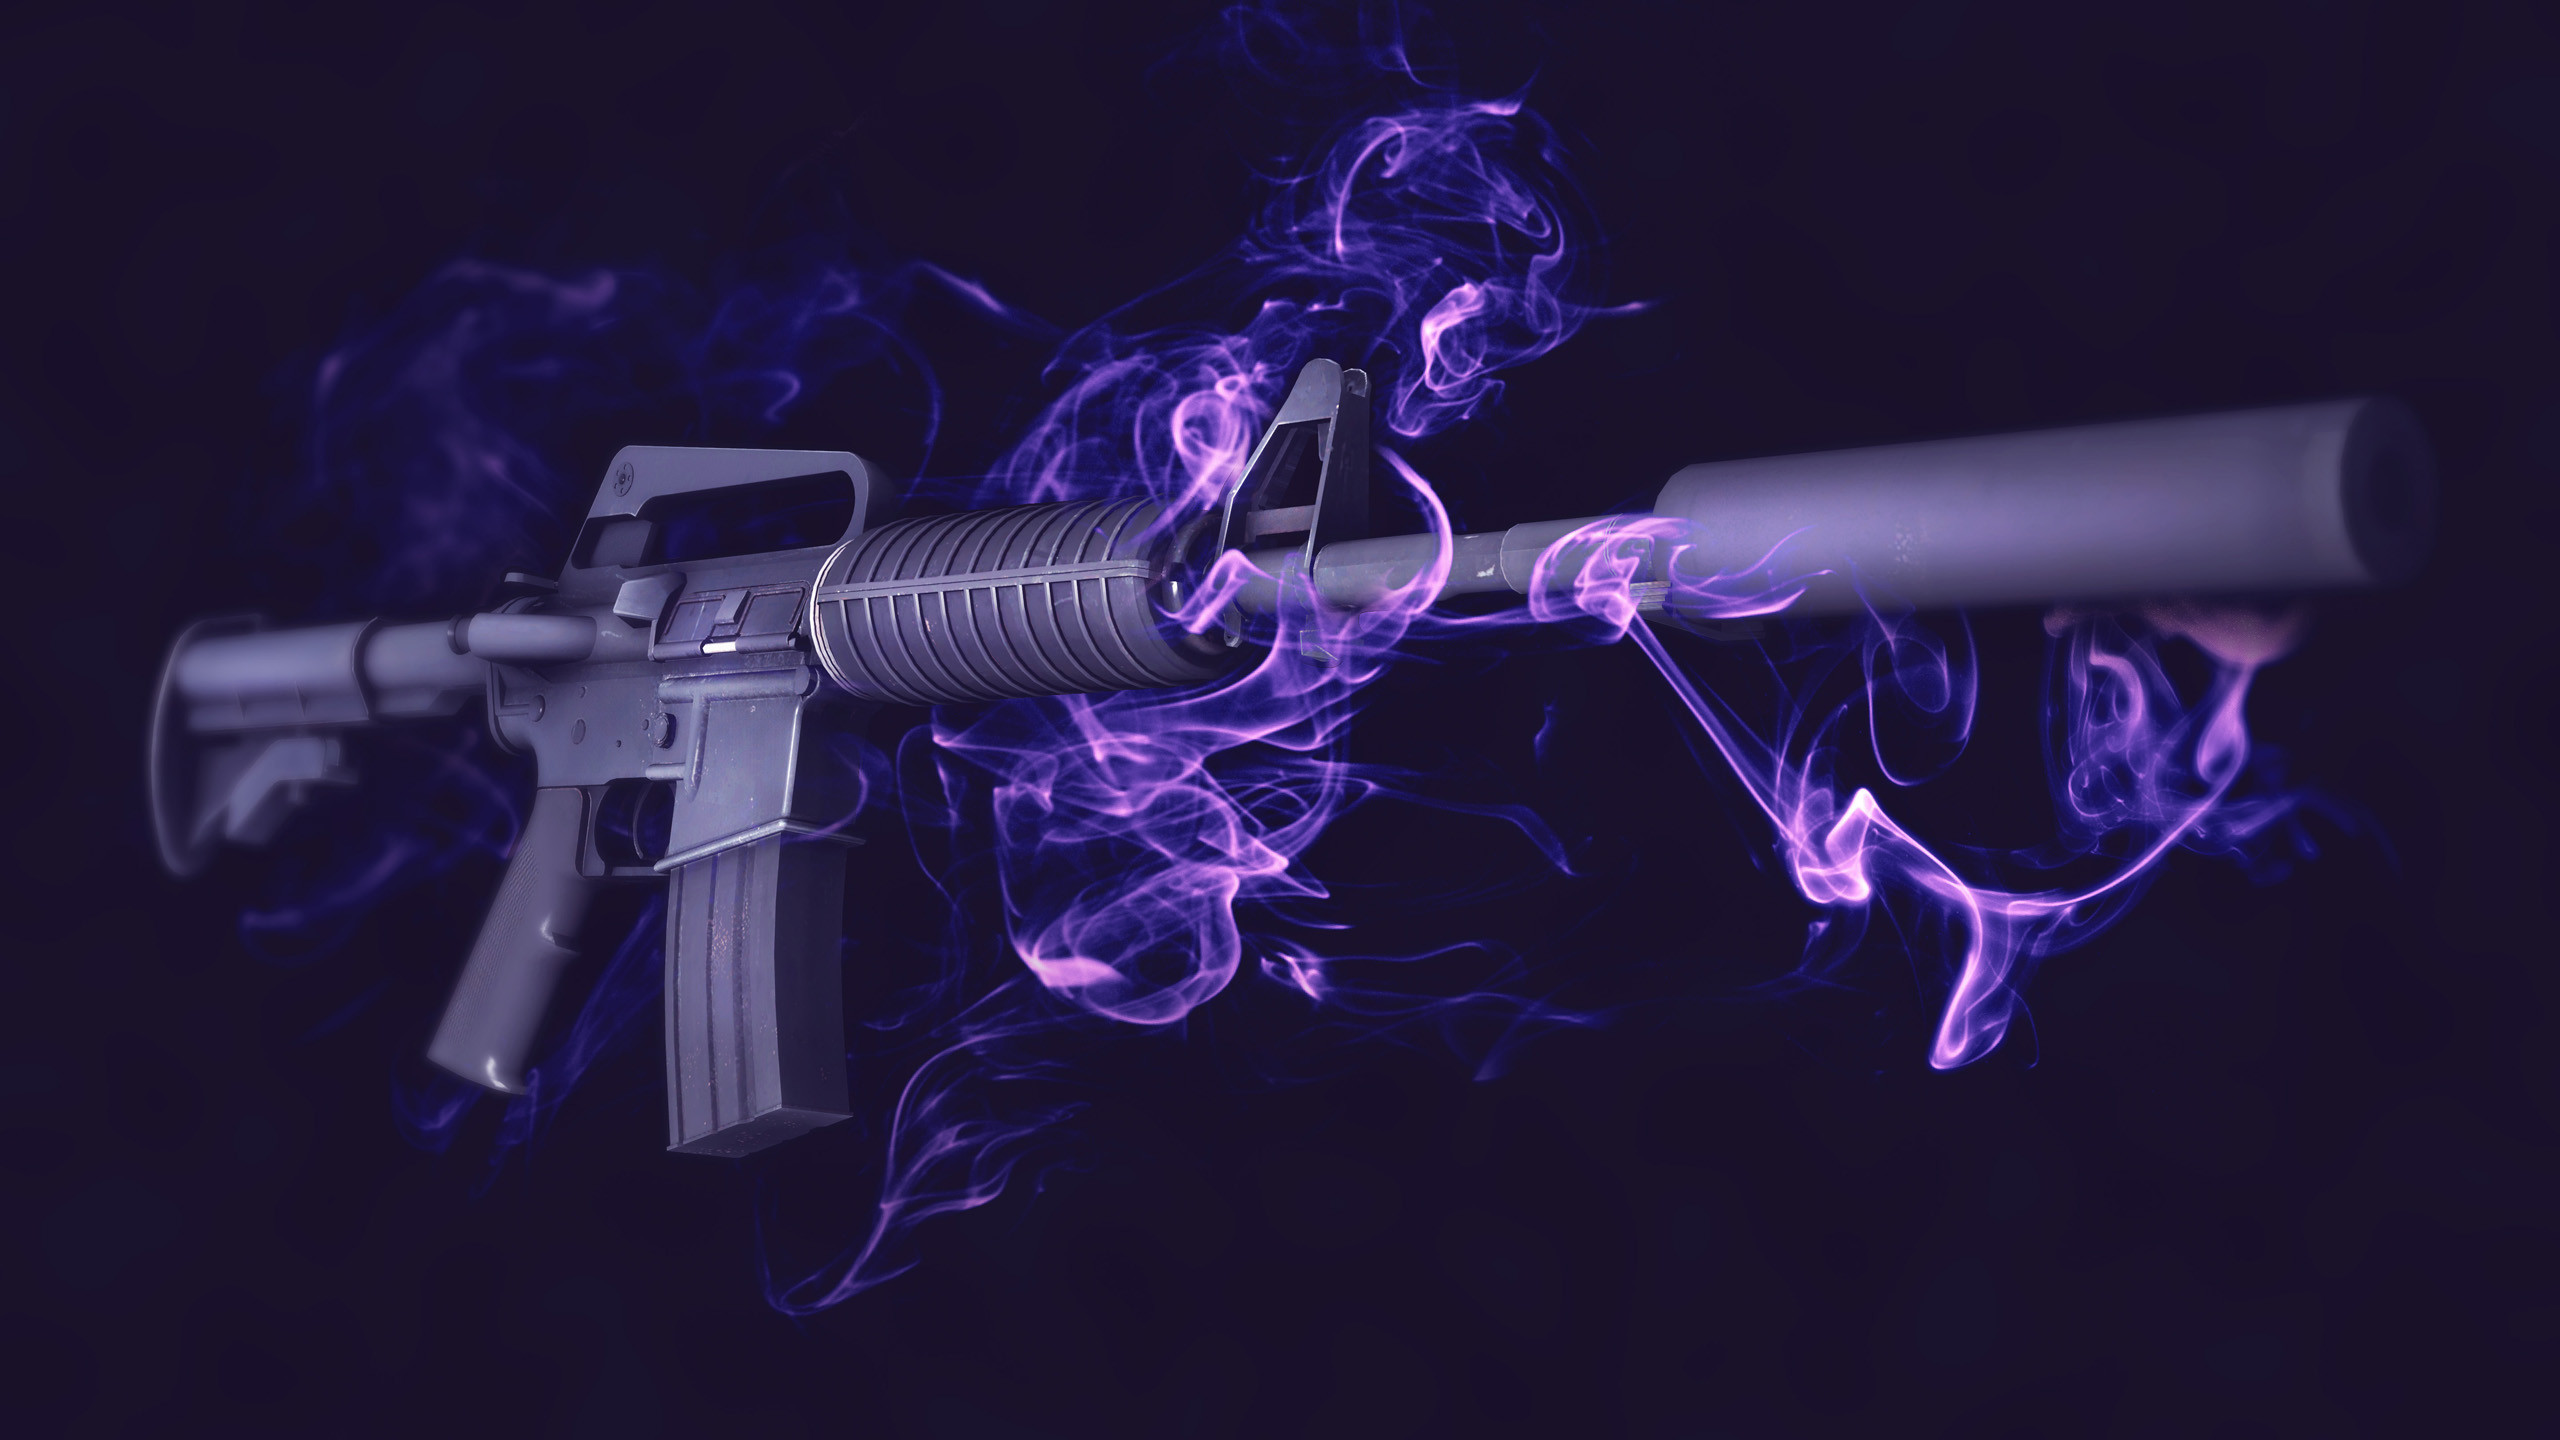 cs go wallpaper full hd,gun,firearm,purple,laser guns,trigger